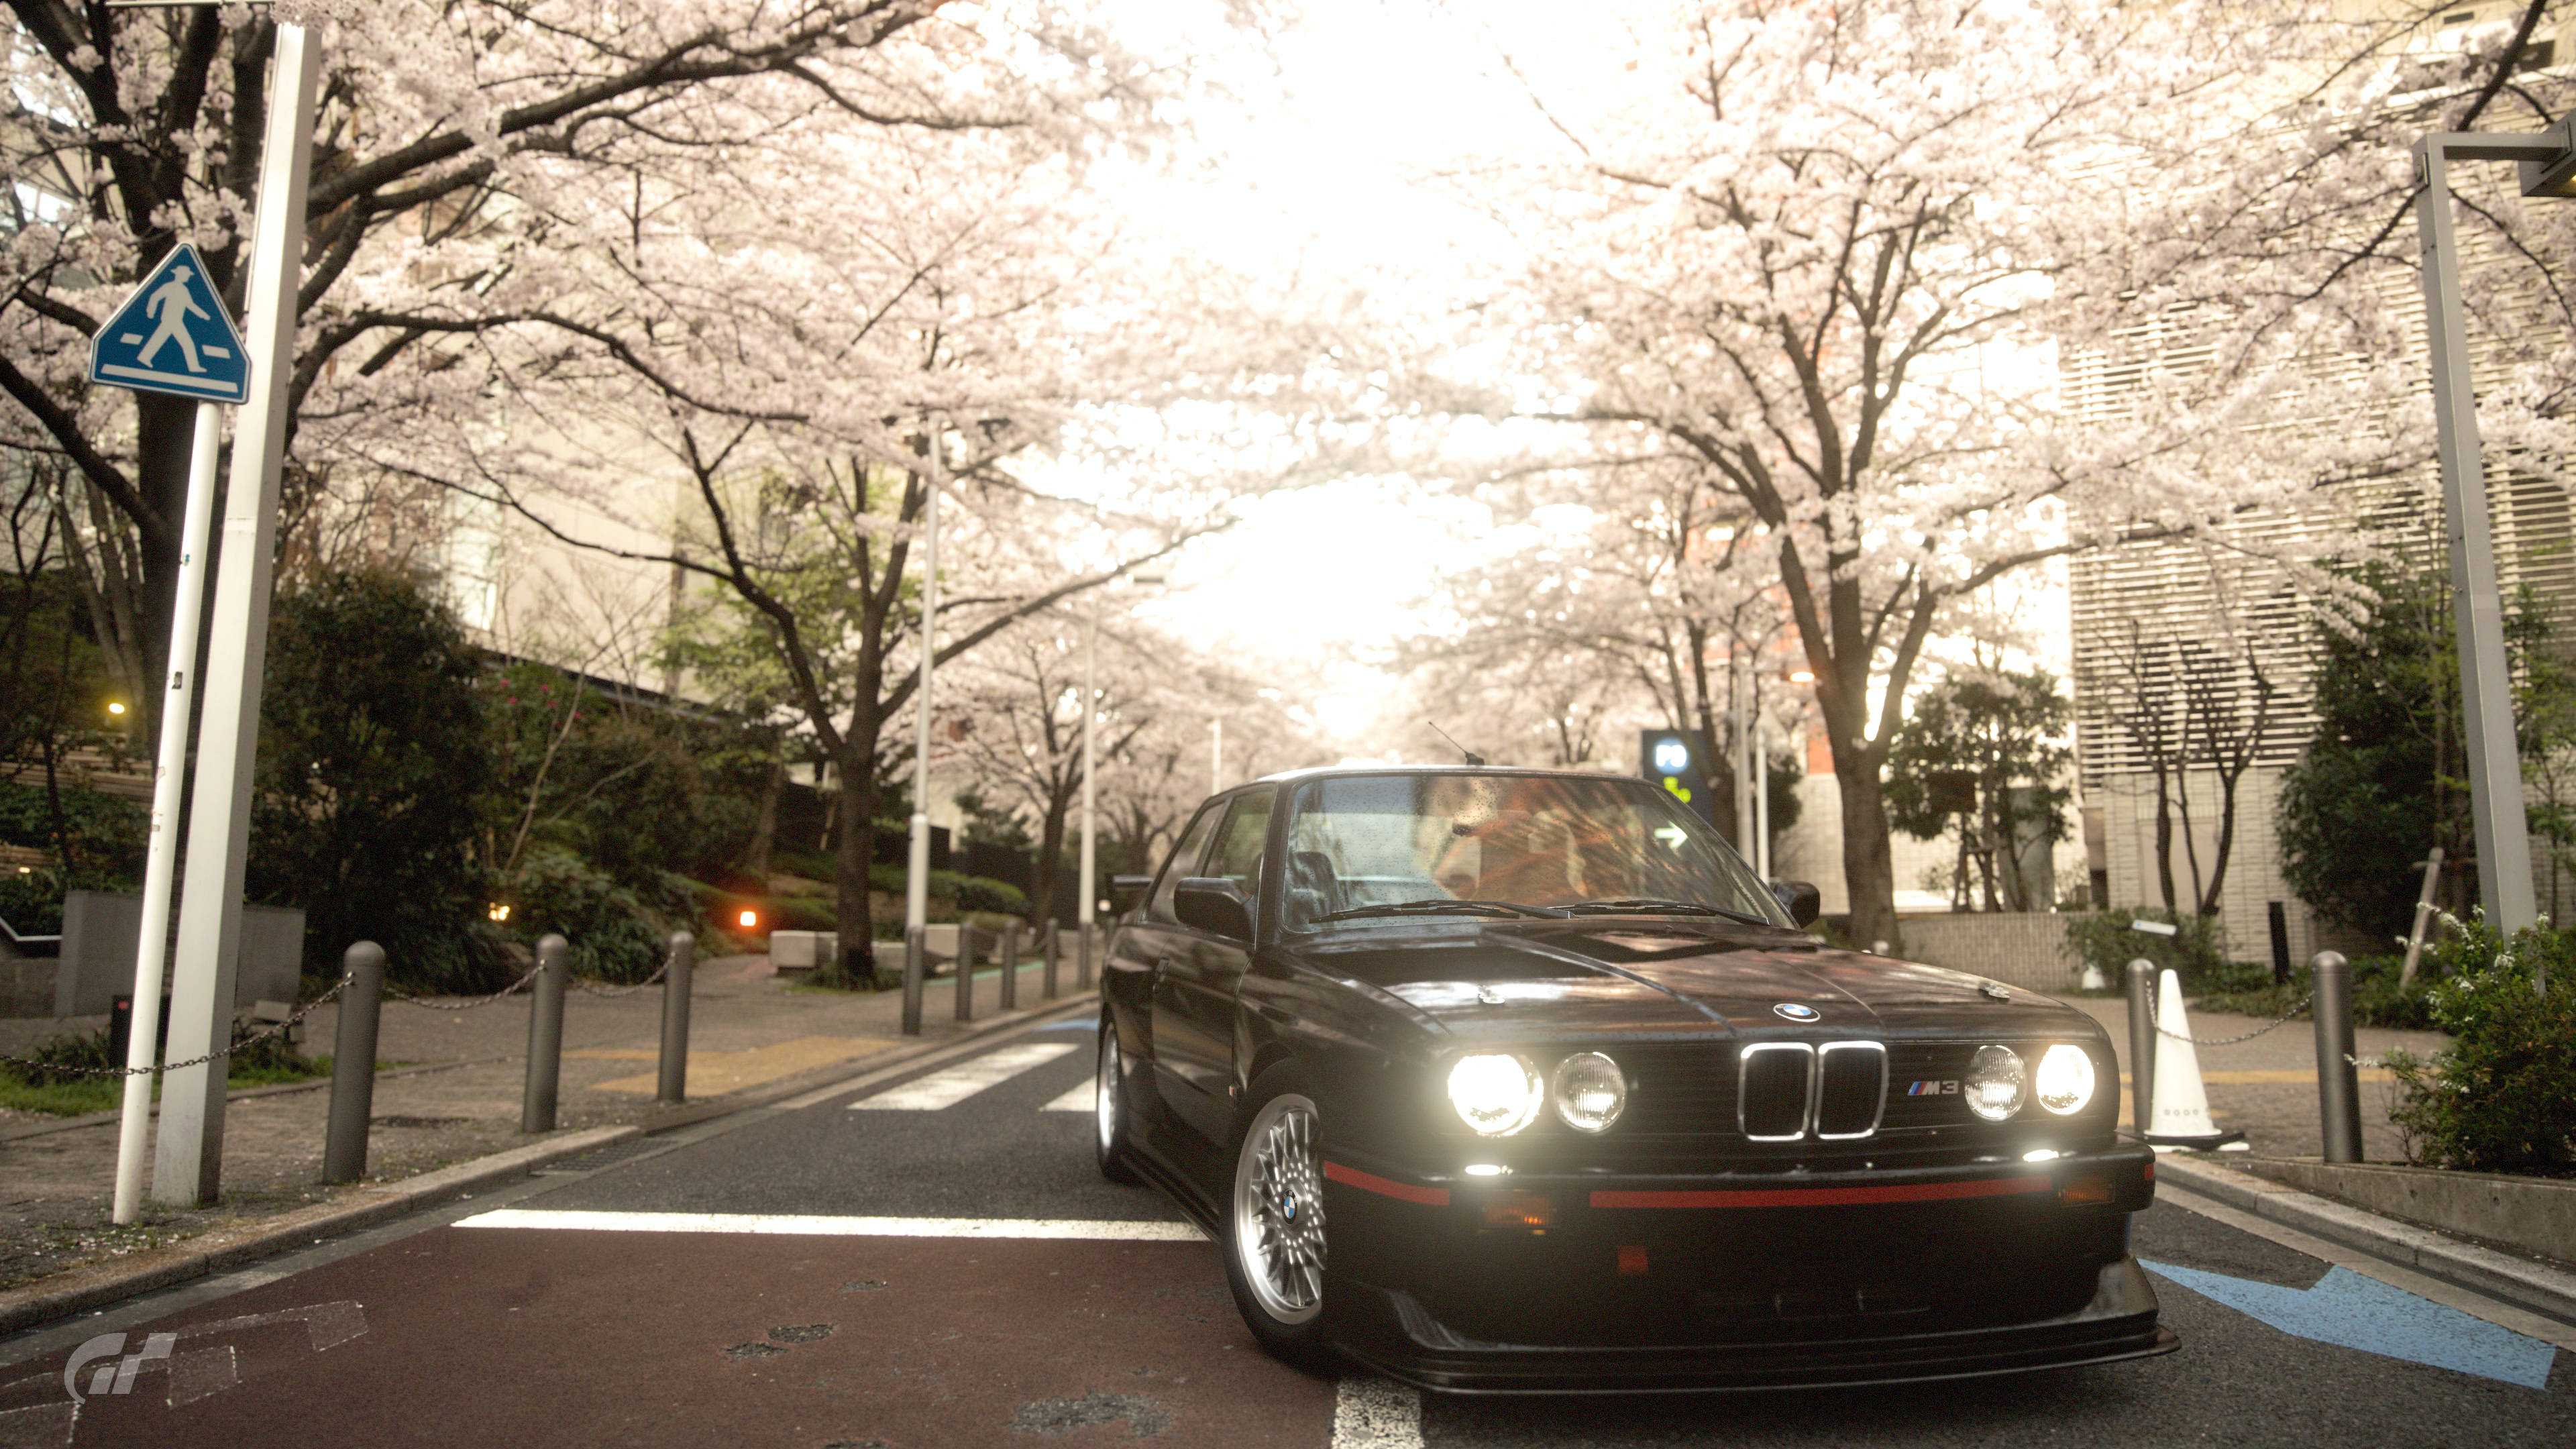 General 3840x2160 car vehicle Japan spring cherry blossom BMW video games street Tokyo daylight Gran Turismo 7 frontal view headlights trees signs digital art